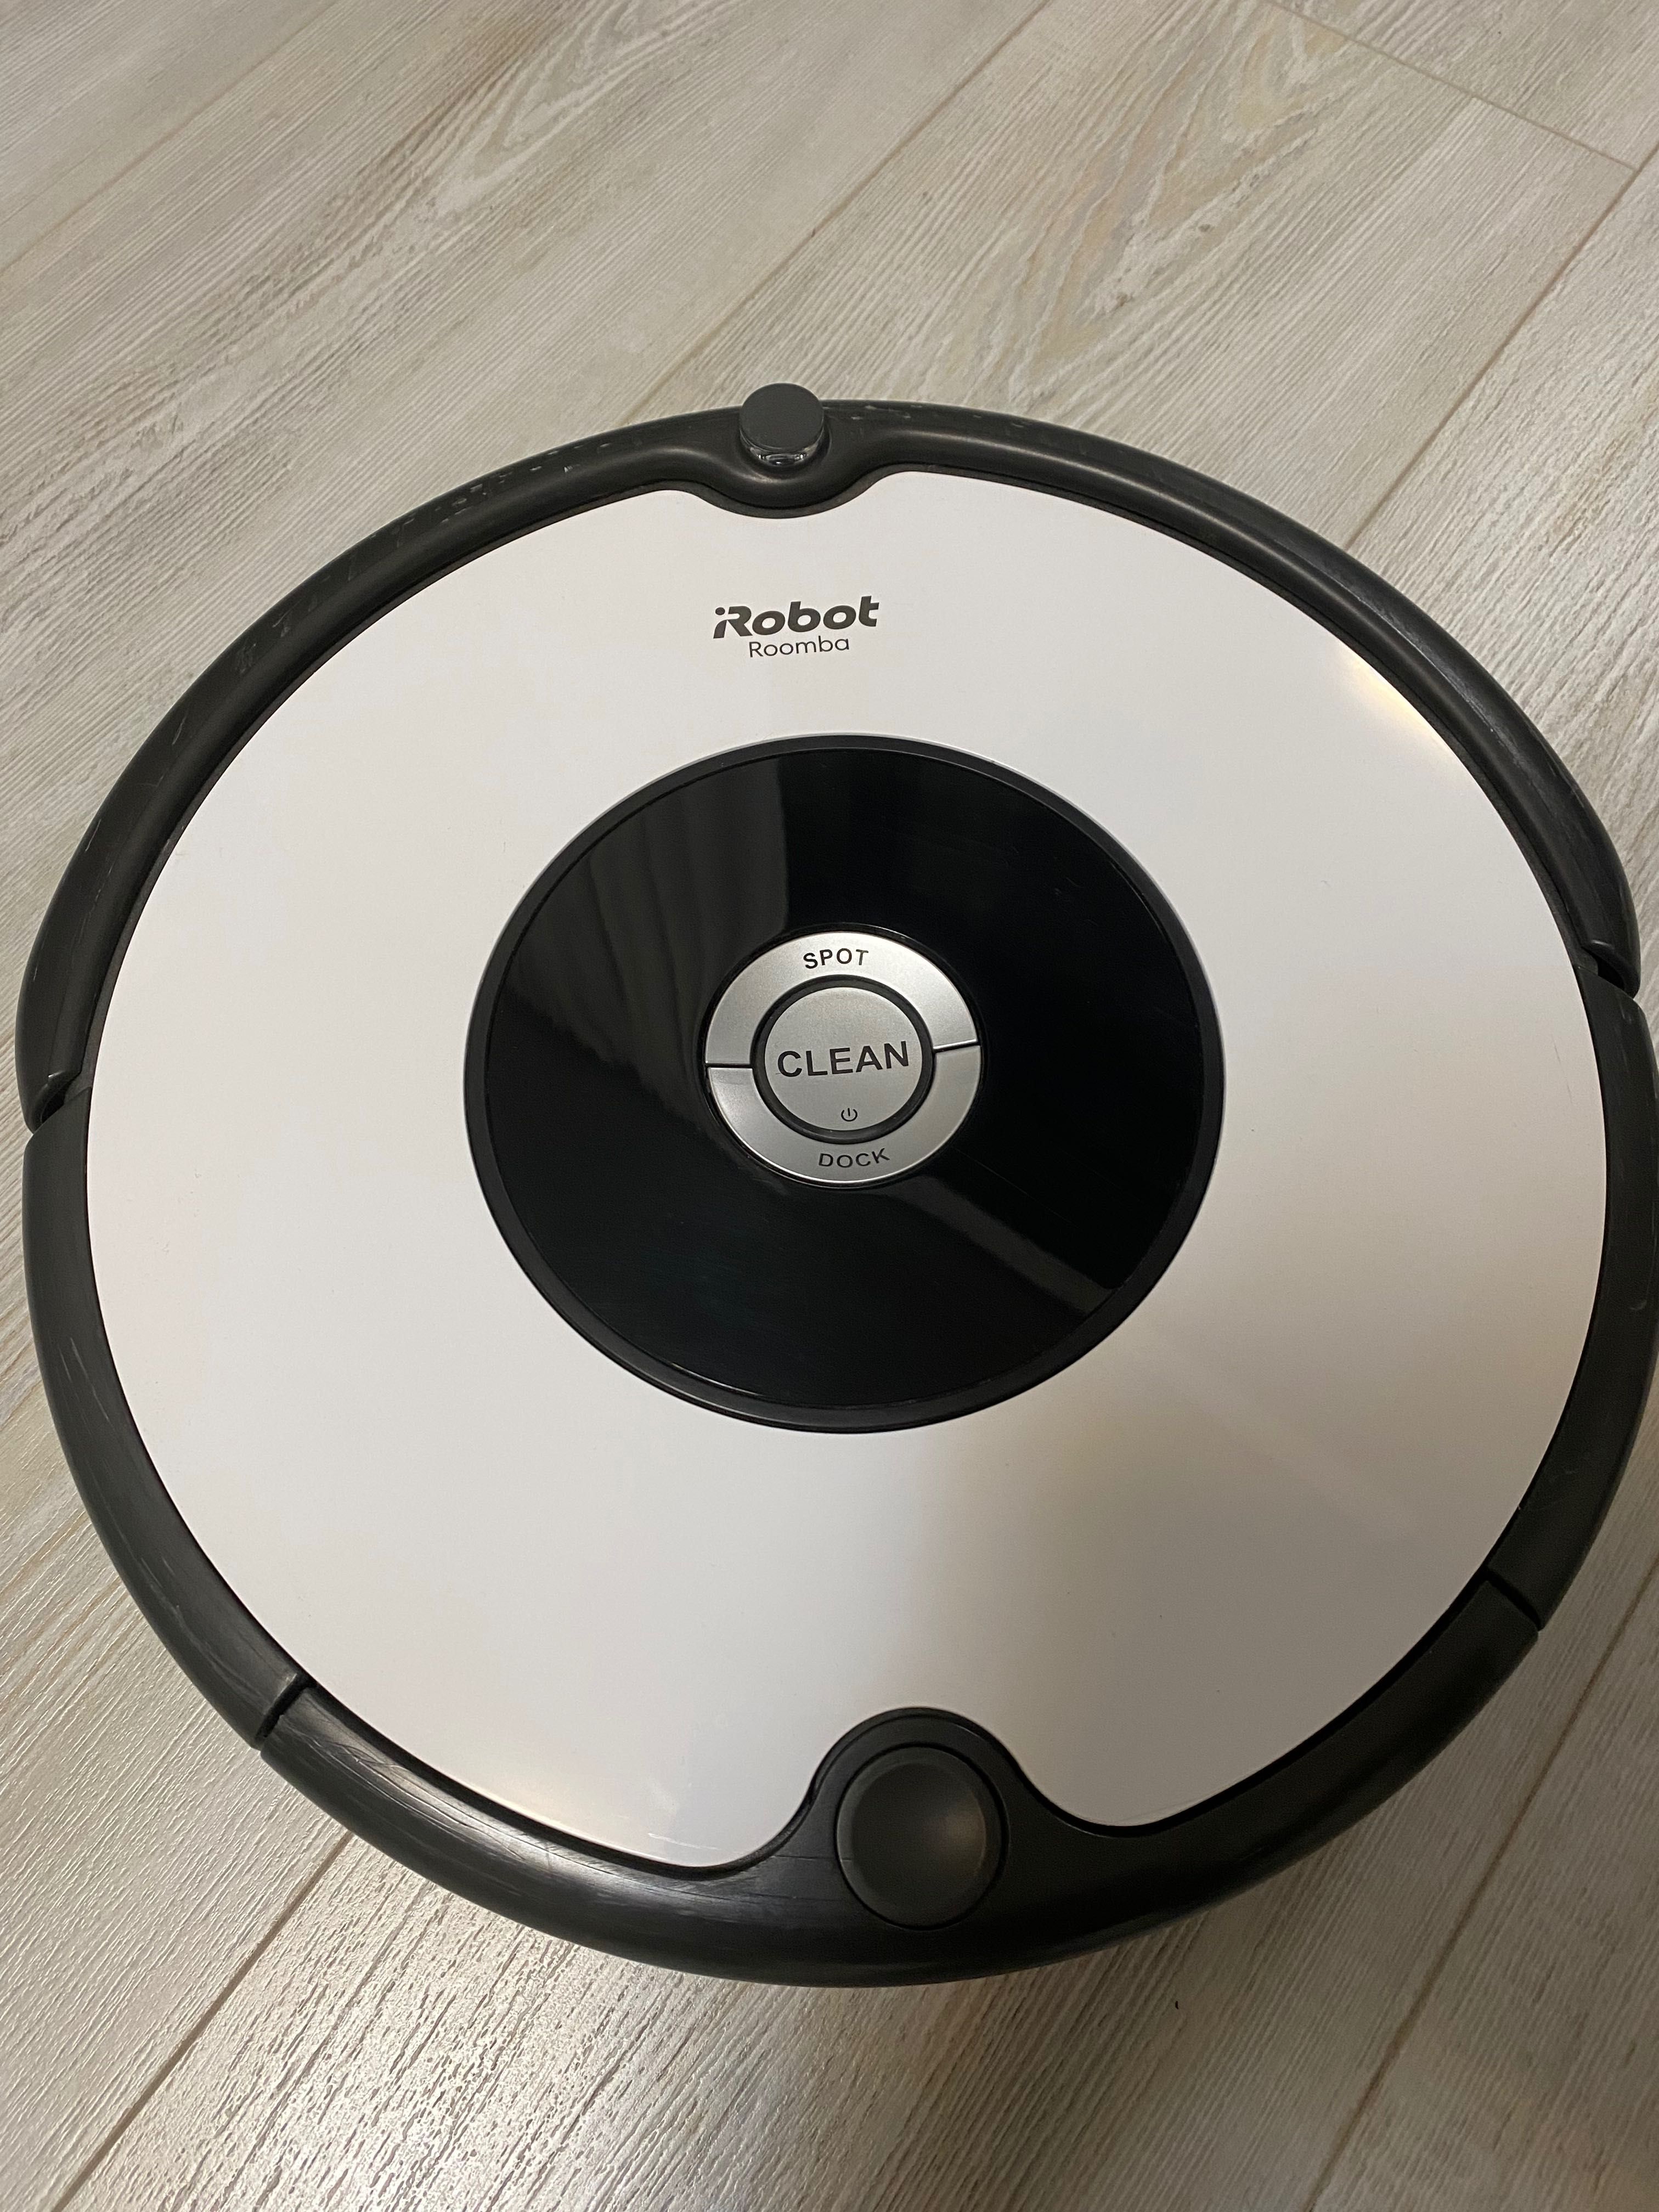 Roomba iRobot Model Number 605